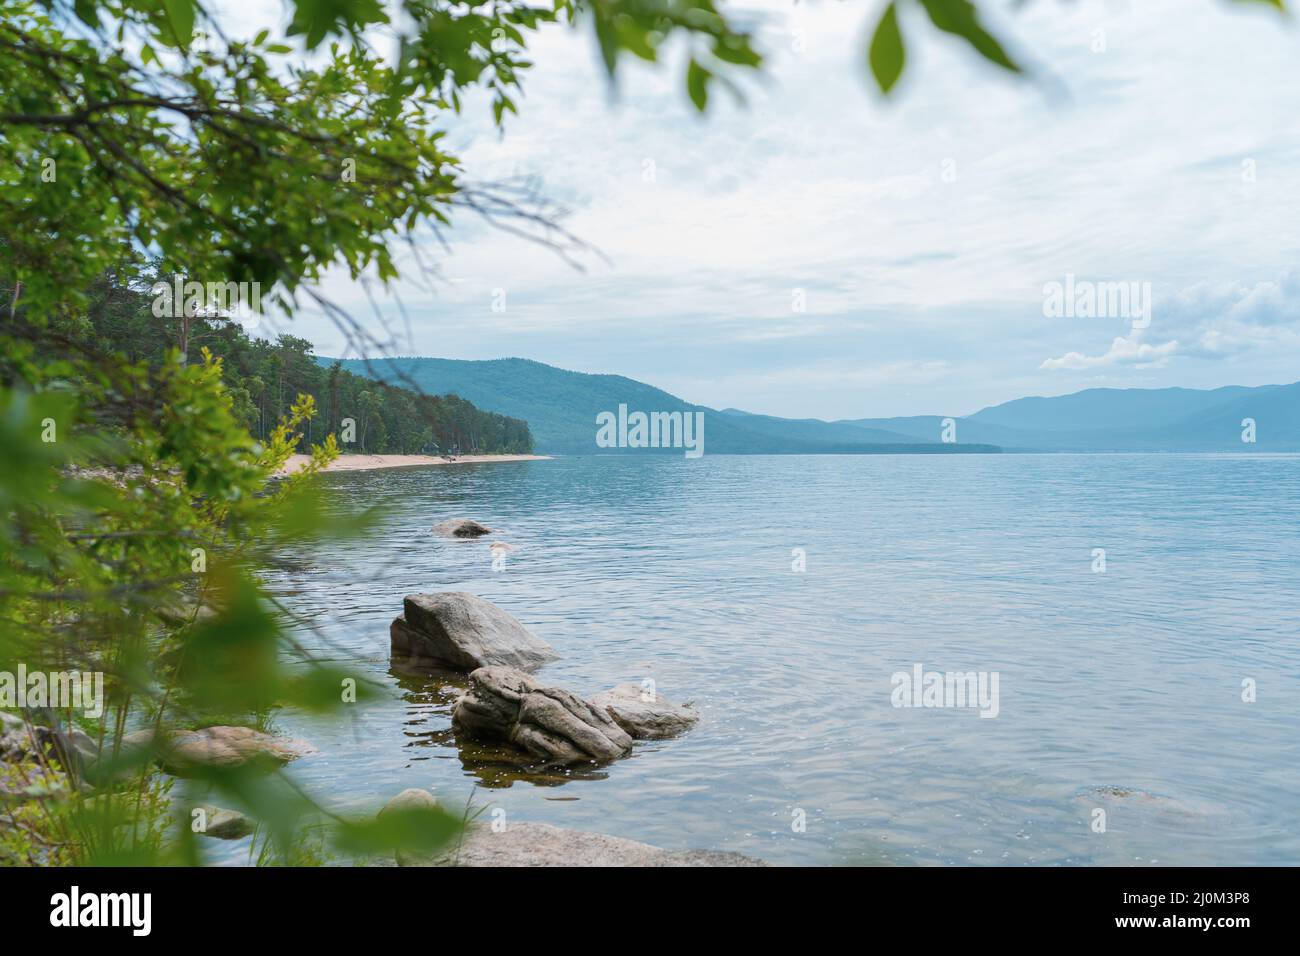 Malerischer Blick auf den Baikalsee in Südsibirien, Russland. Baikalsee Sommer Landschaft Blick. Stockfoto